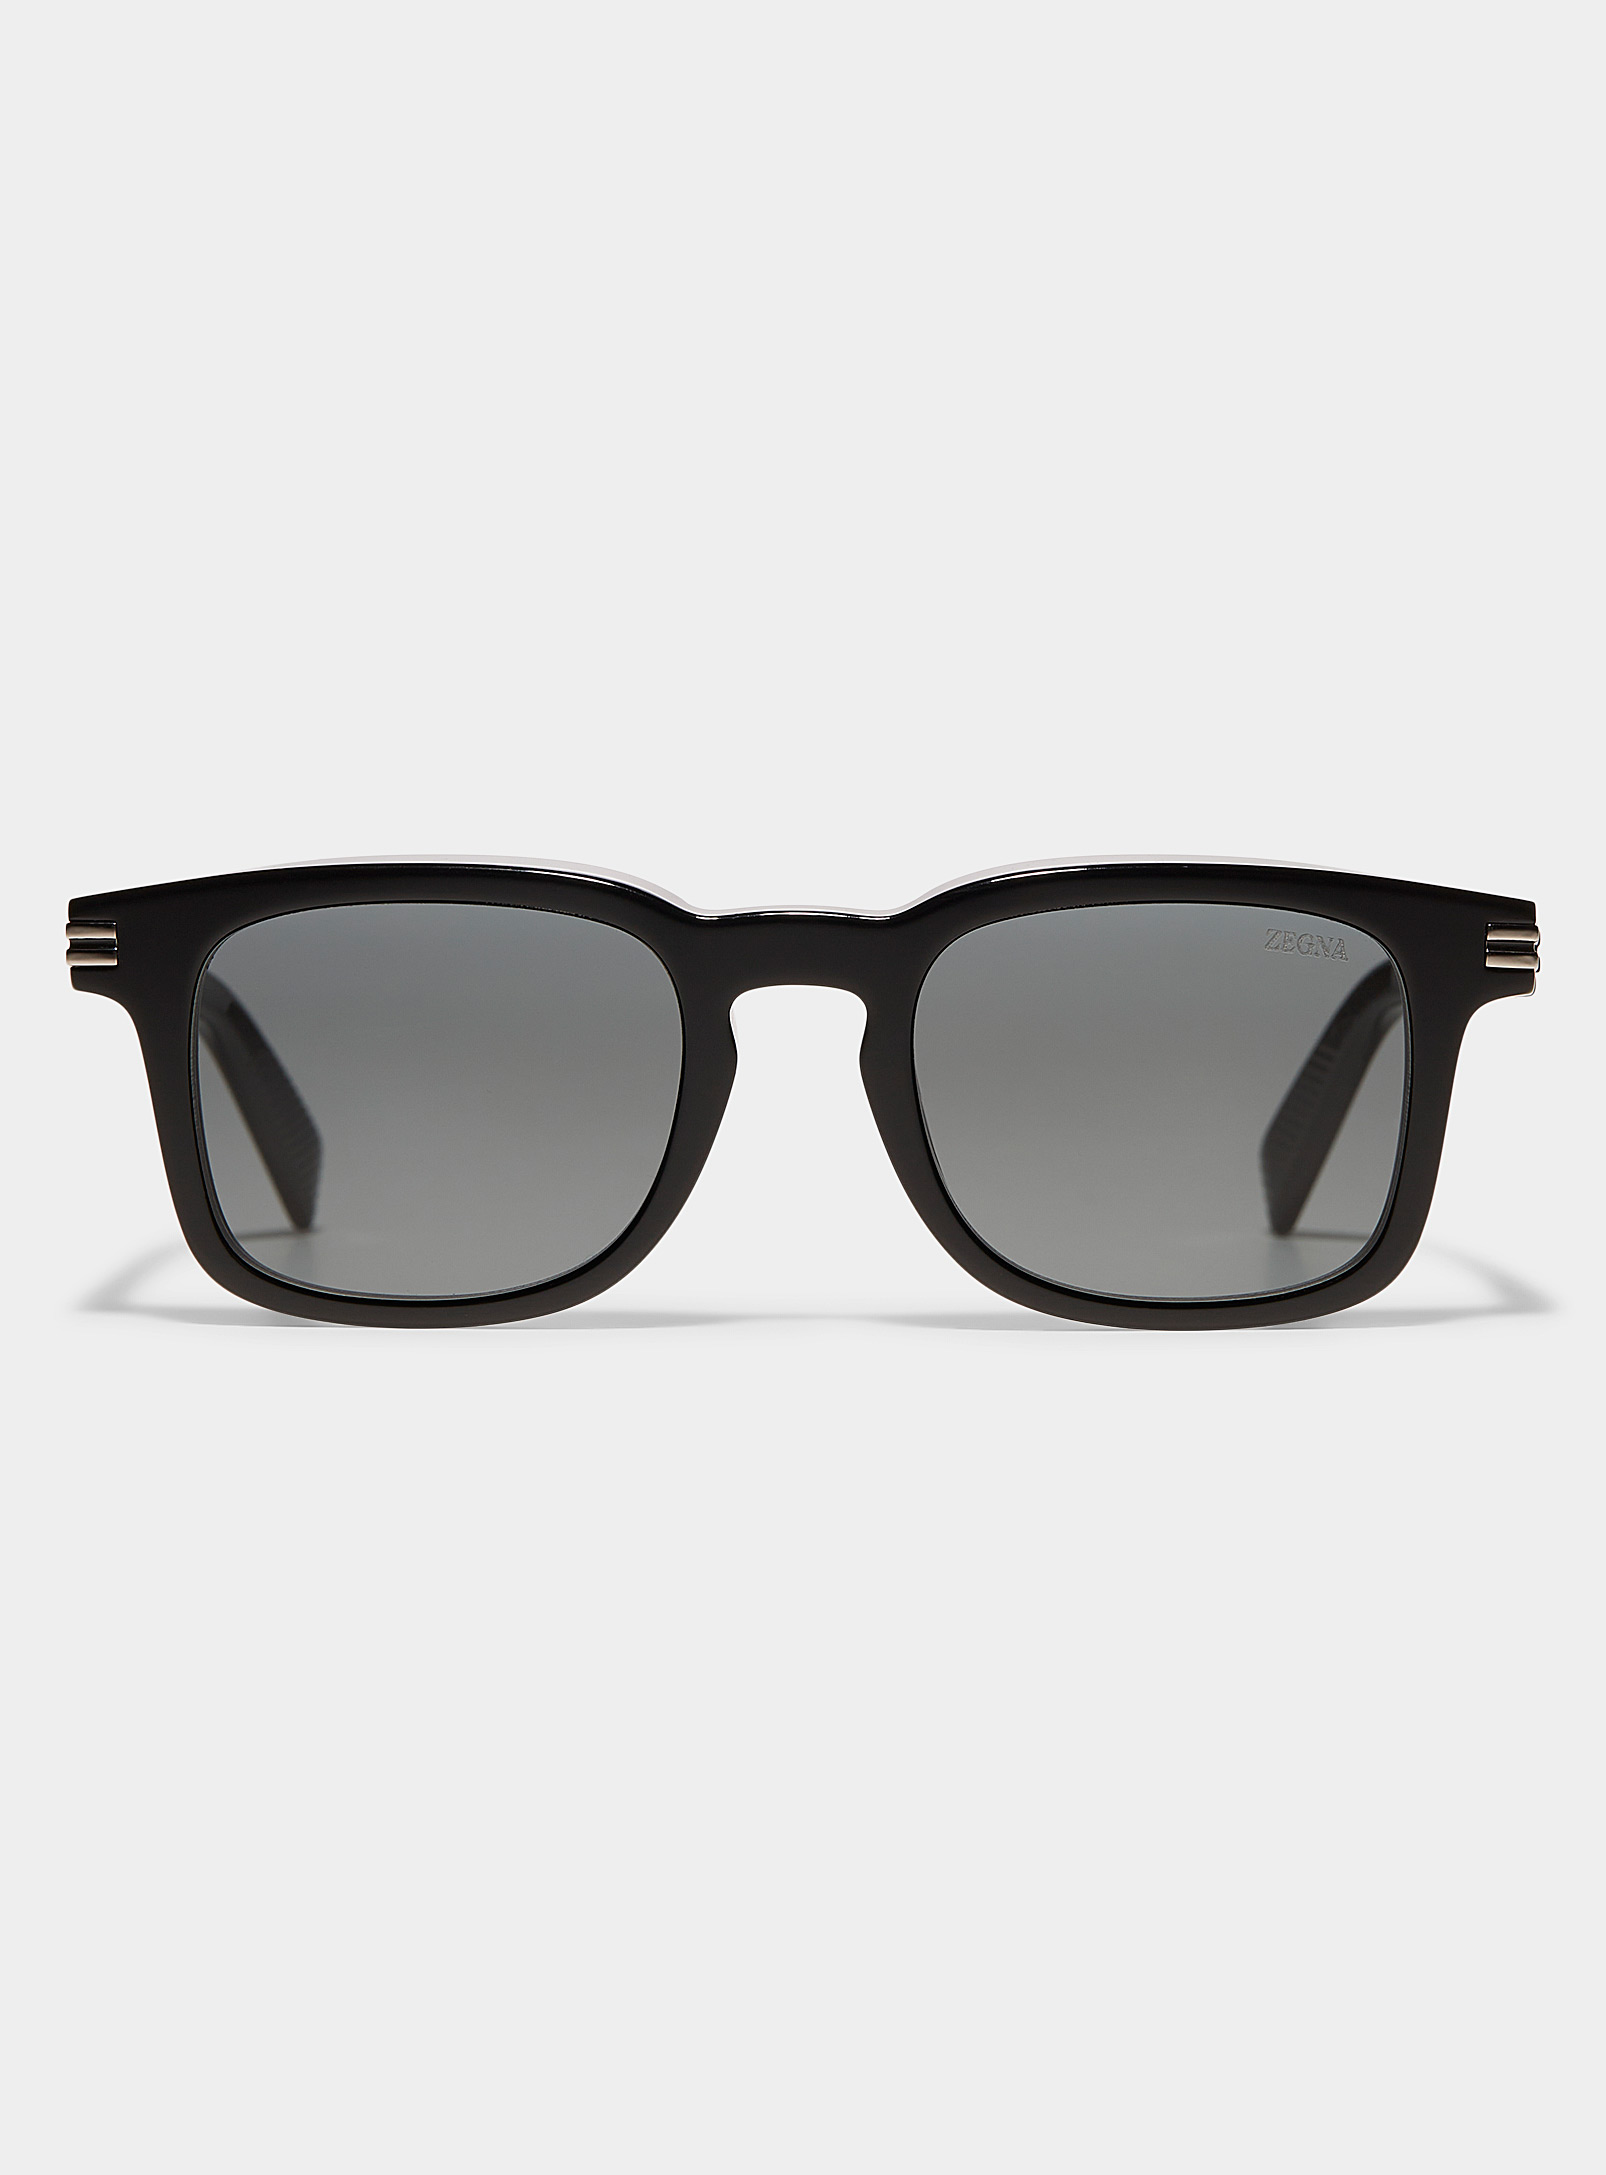 Zegna - Wayfarer black sunglasses